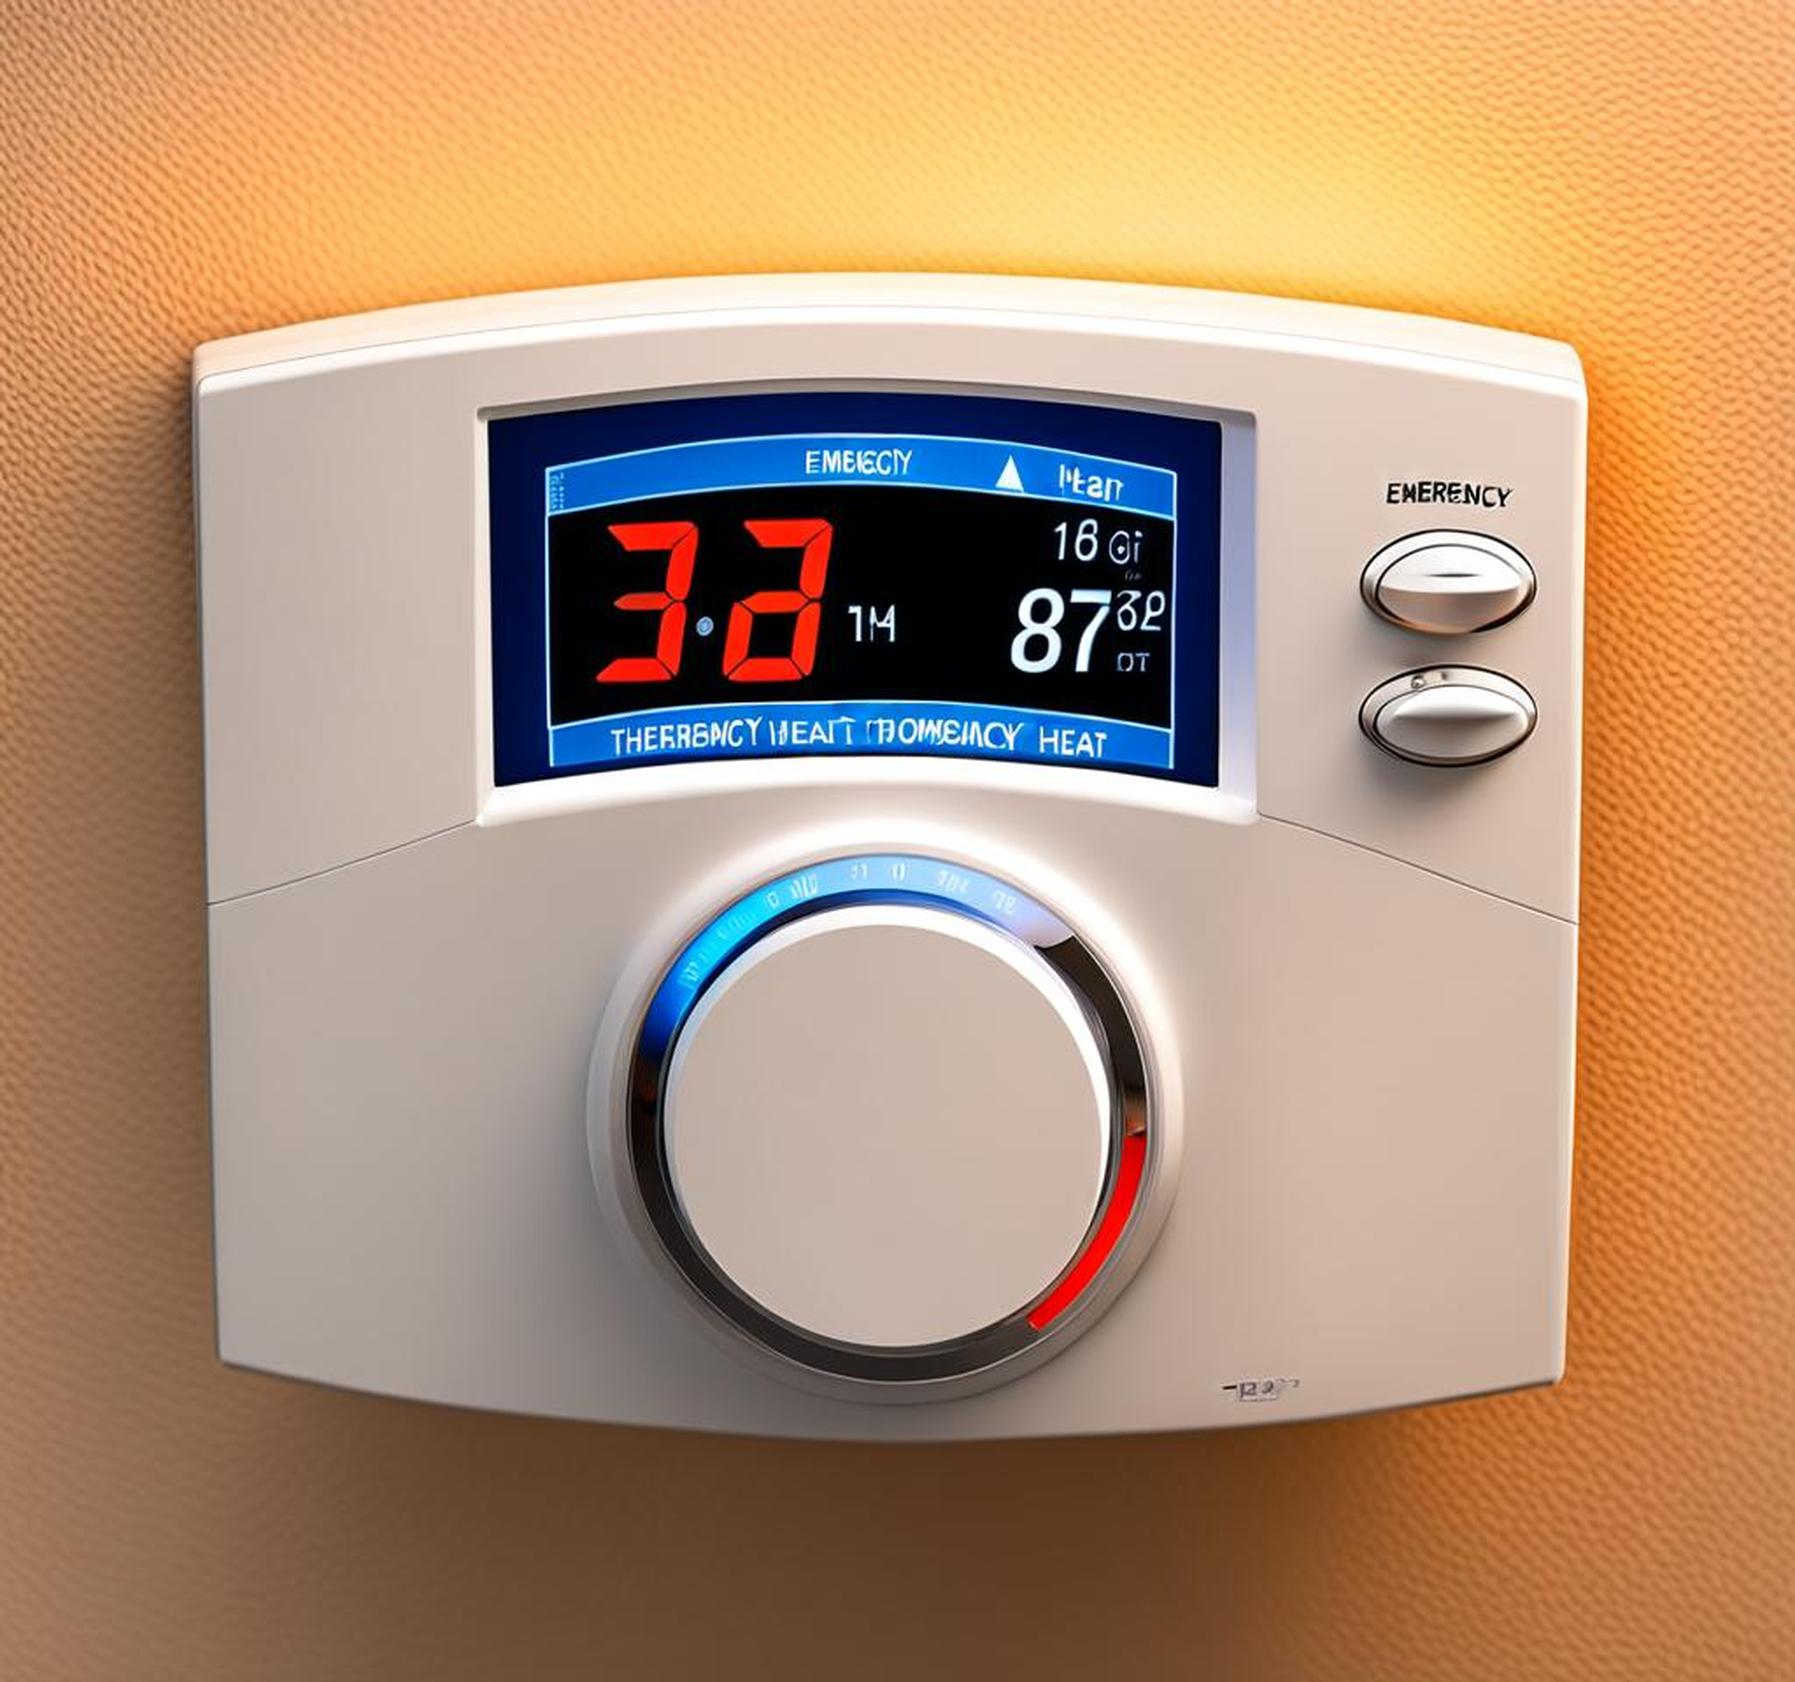 emergency heat on thermostat